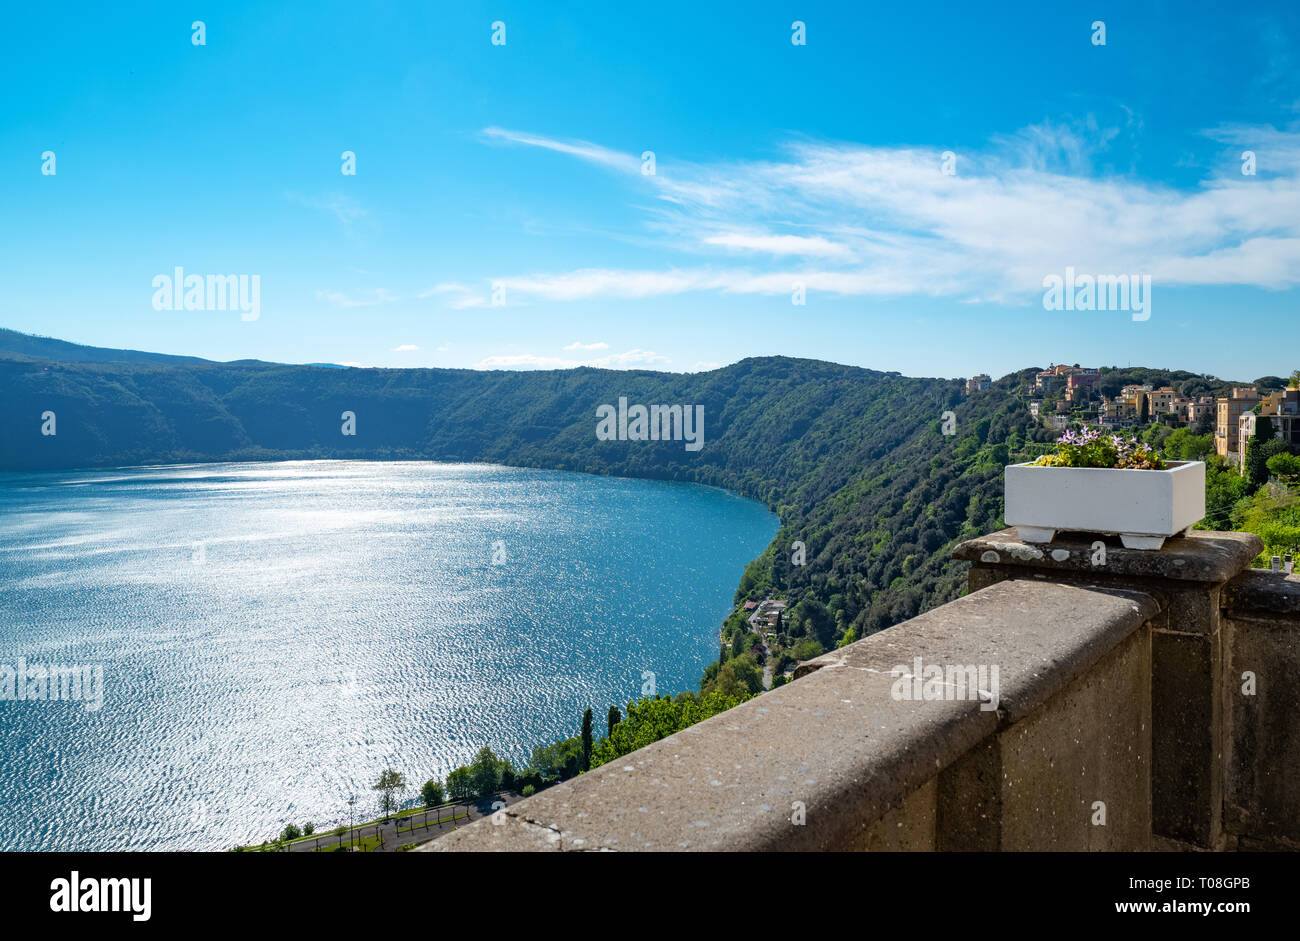 Italy, Castelgandolfo, panoramic view of the village overlooking the volcanic Albano lake Stock Photo